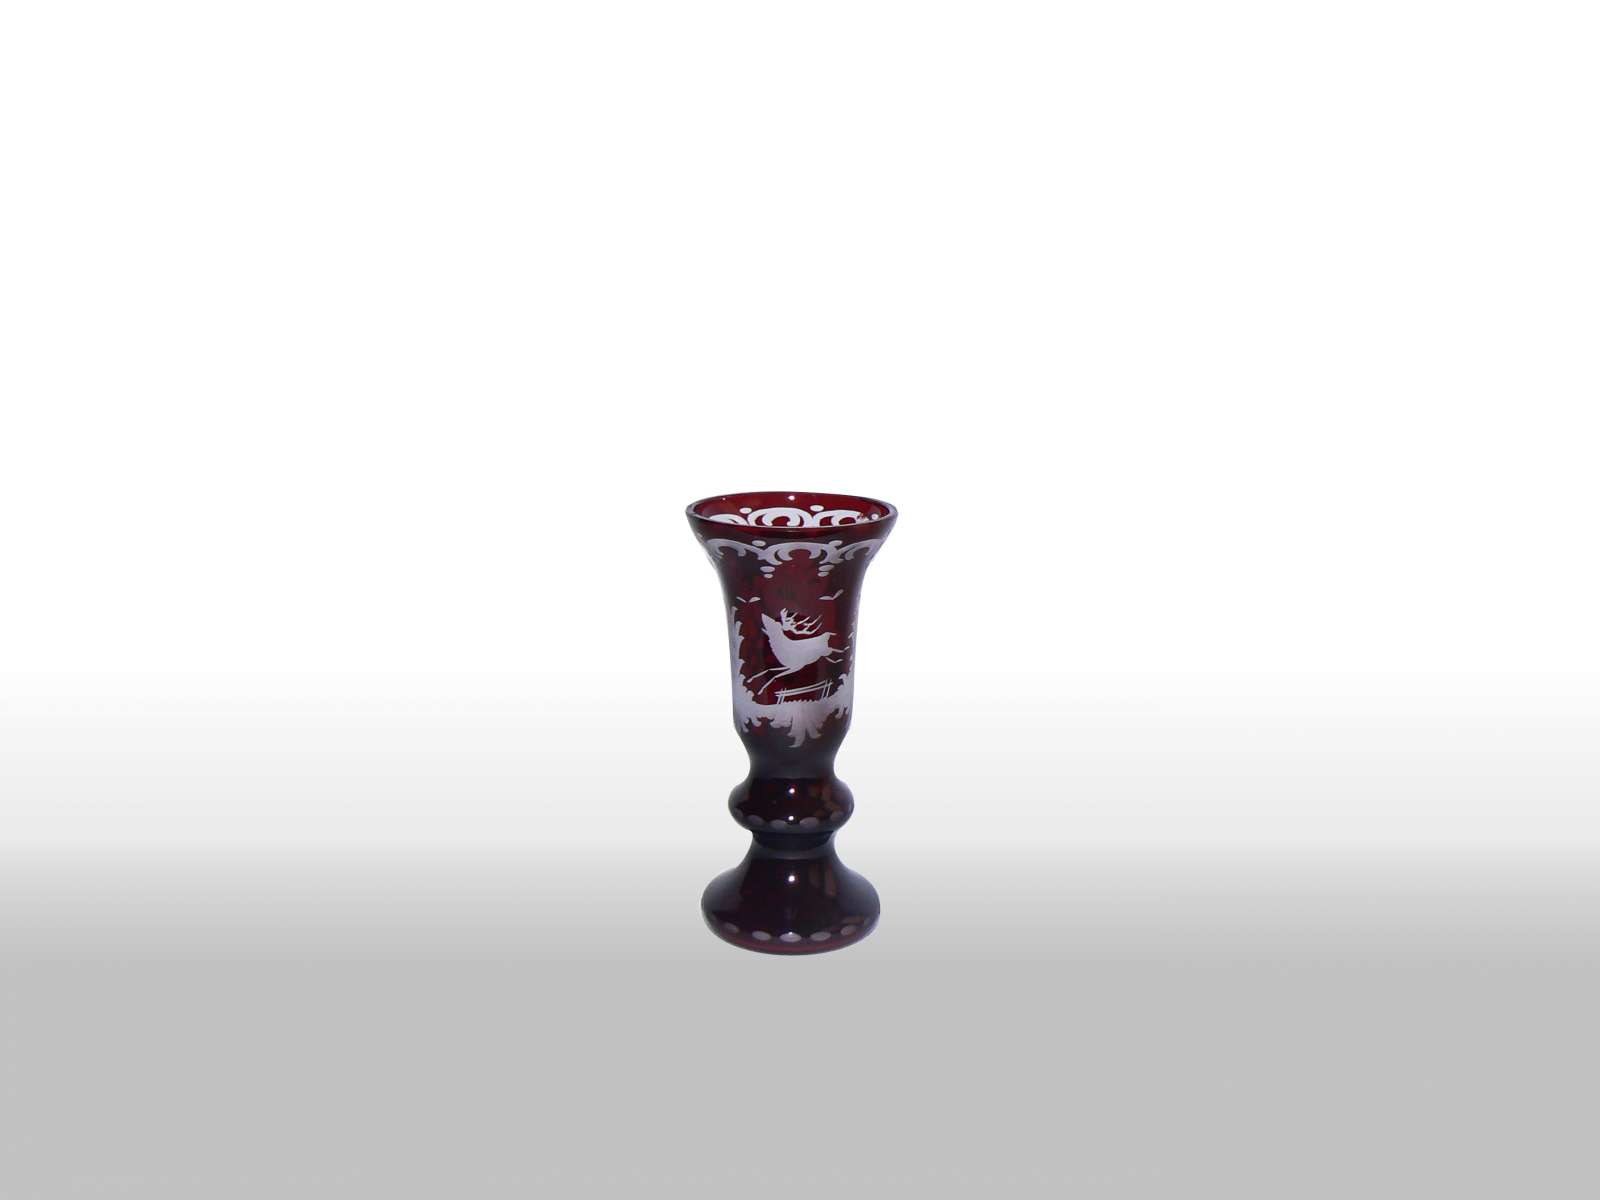 Sklo váza miniatura | Kód zboží: E/mini/8152/12/28011 červená, Arebeska, pohárek | Cena za 1 kus: 0,- Kč